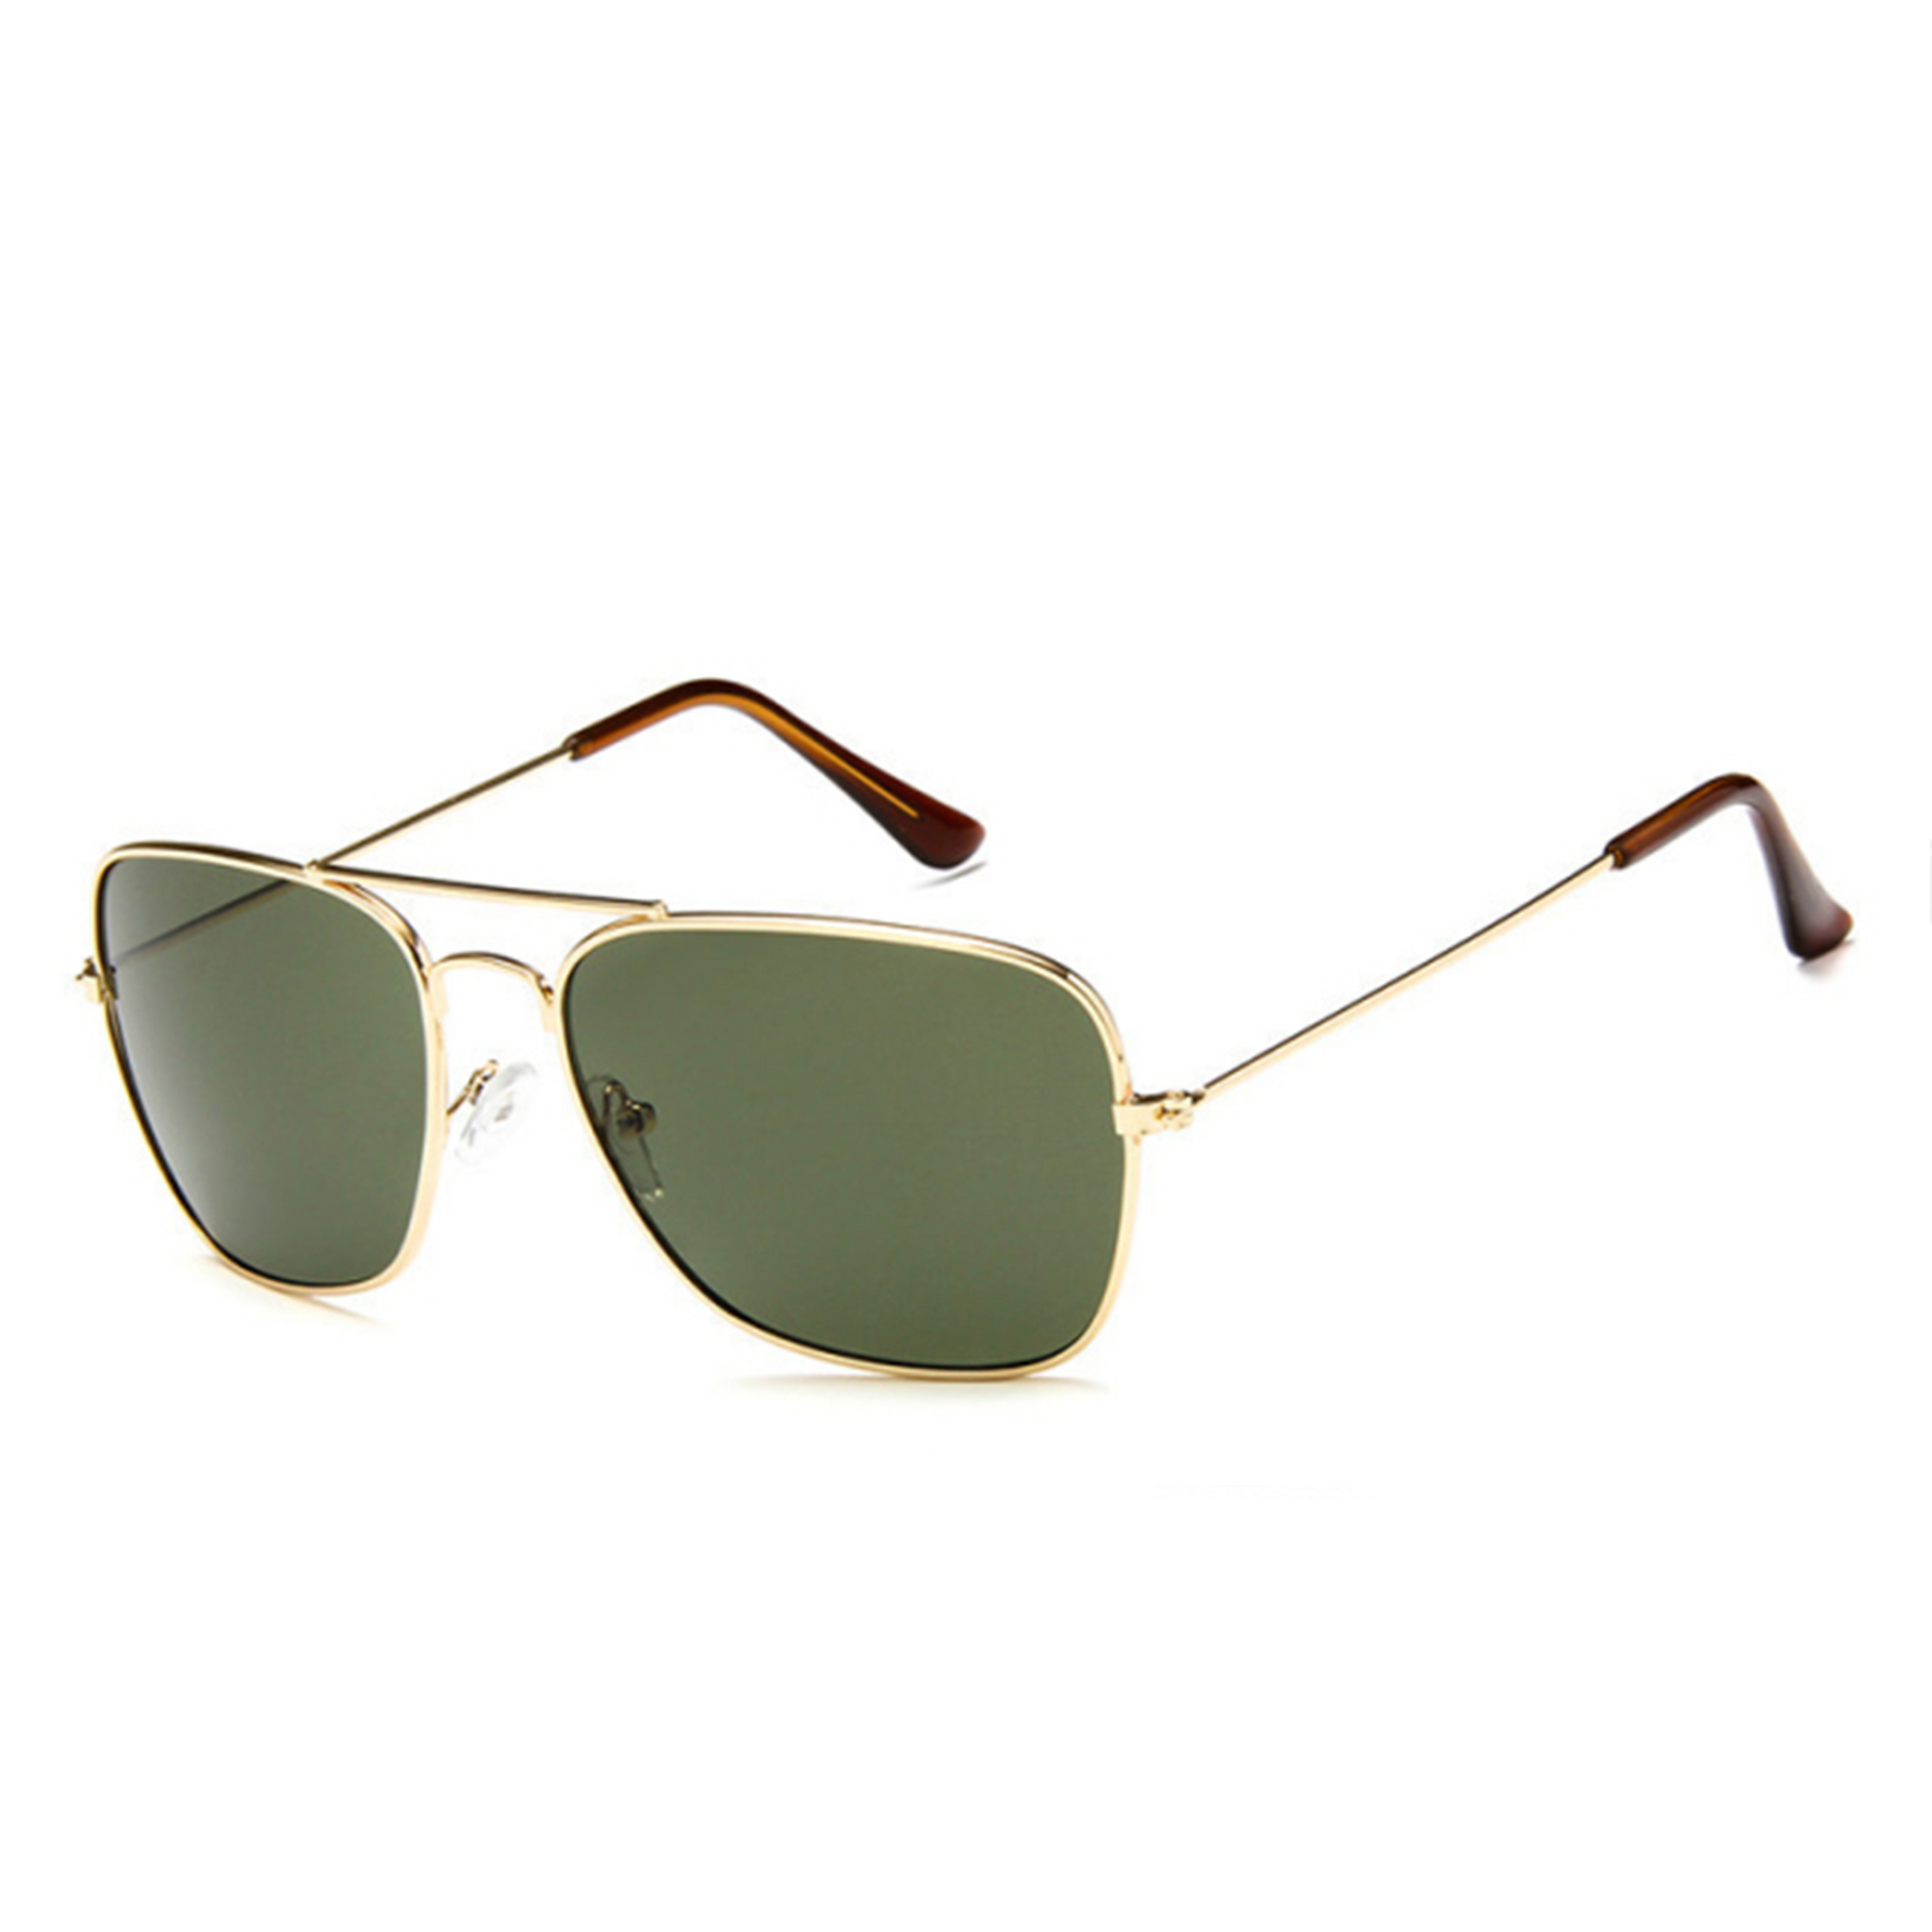 Tasker & Shaw | Luxury Menswear | Eagle, square aviator style sunglasses